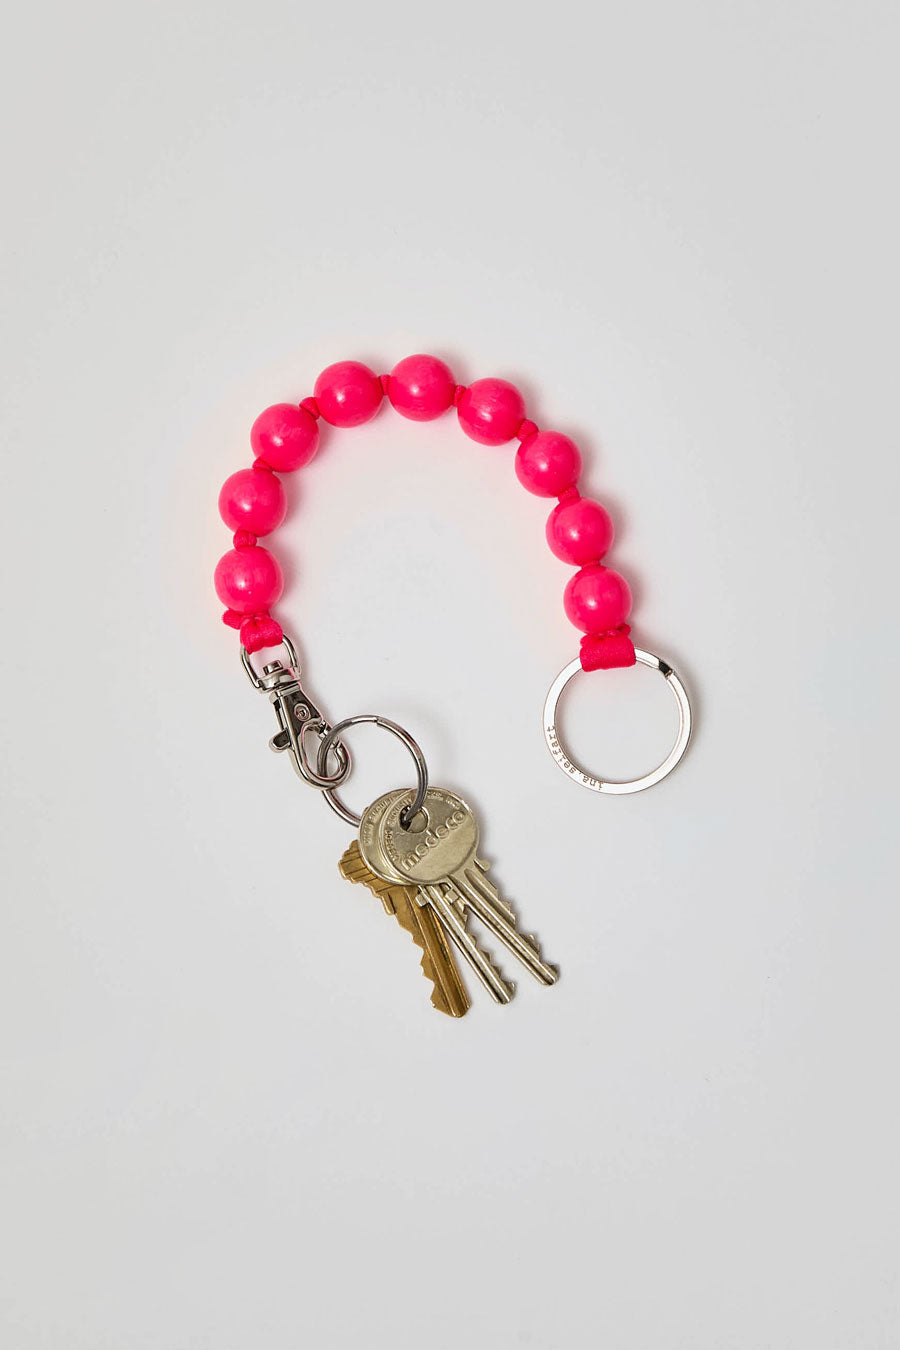 Ina Seifart Dicke Perlen Short Keyholder in Neon Pink